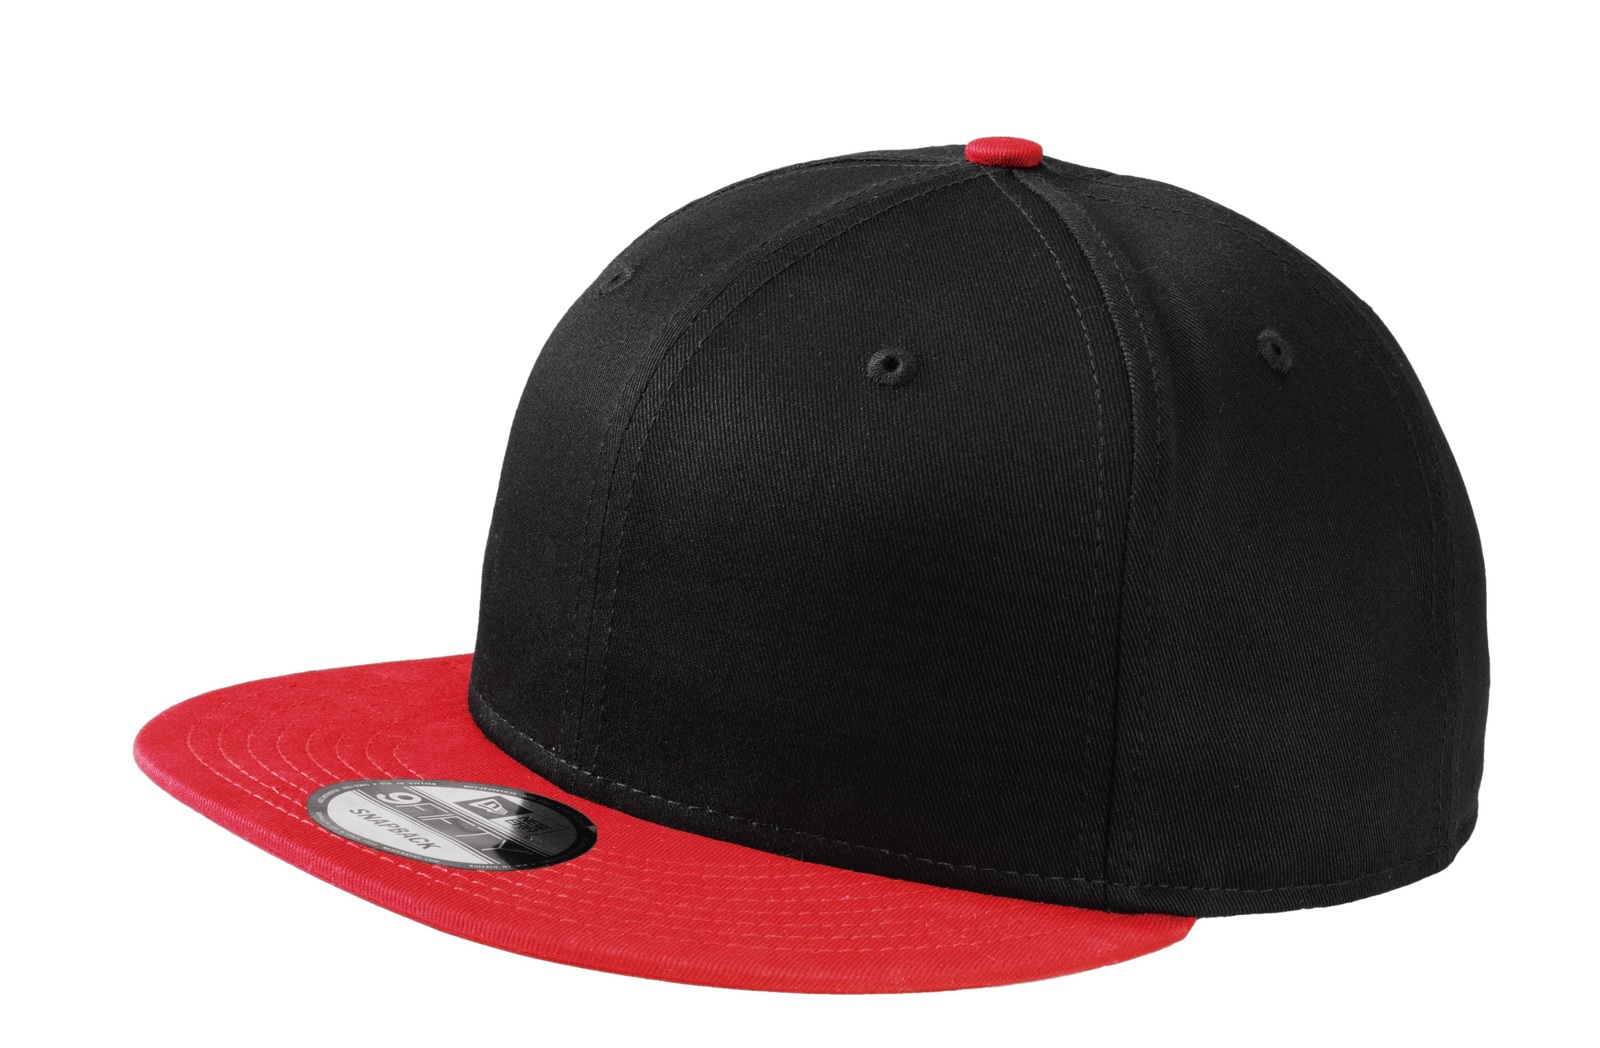 New Era 9fifty Flat Brim Snapback Hat Cap Blank Black Scarlet 950 New